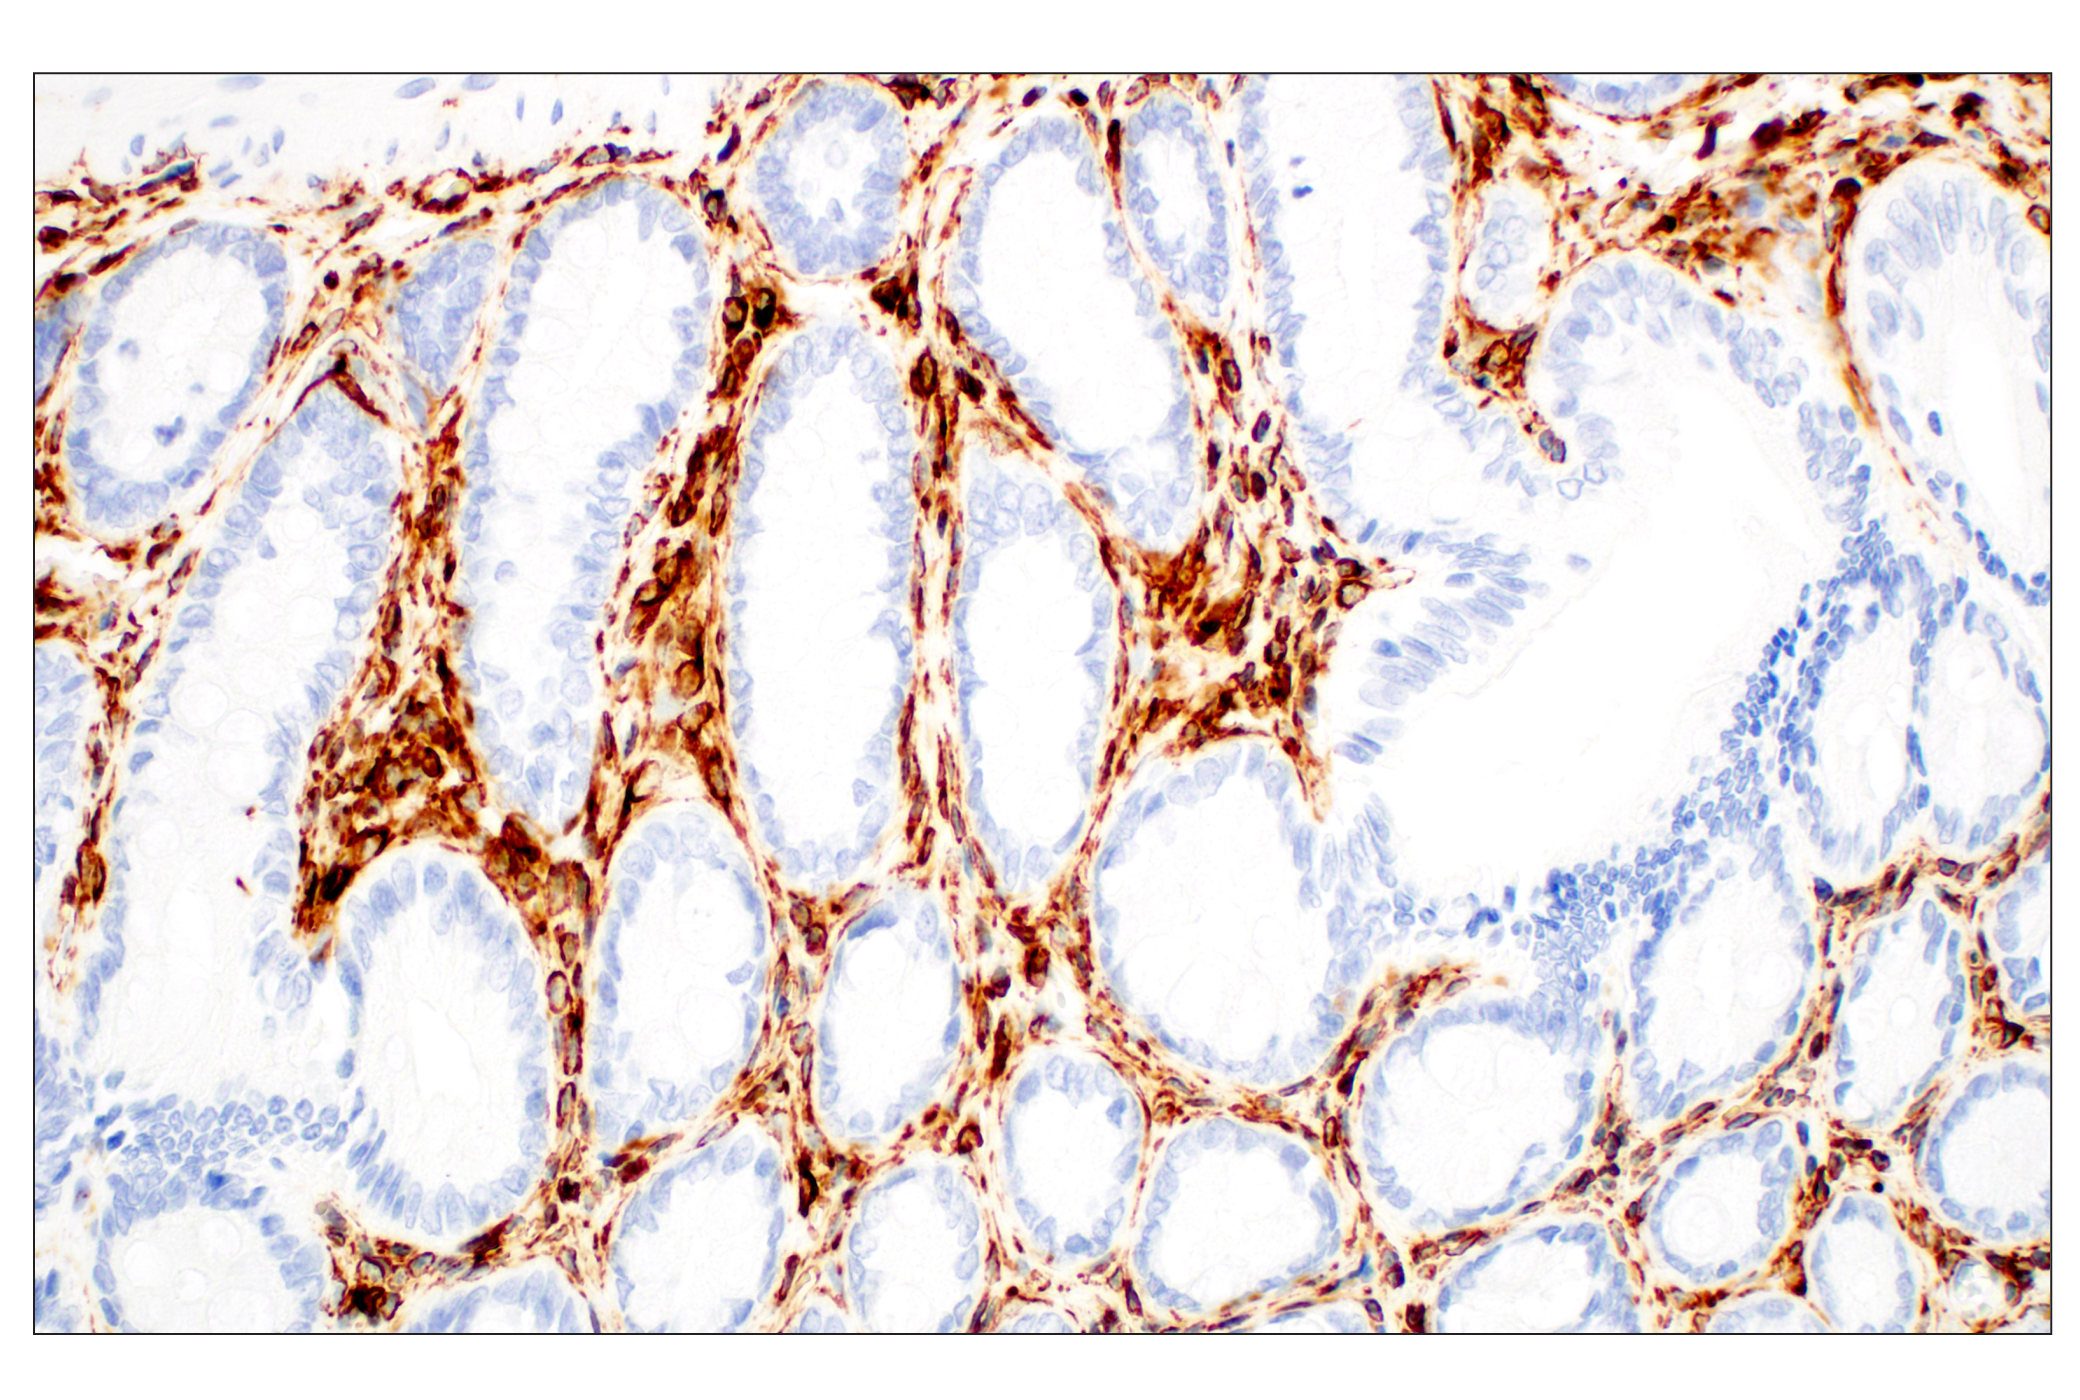  Image 45: Cancer Associated Fibroblast Marker Antibody Sampler Kit